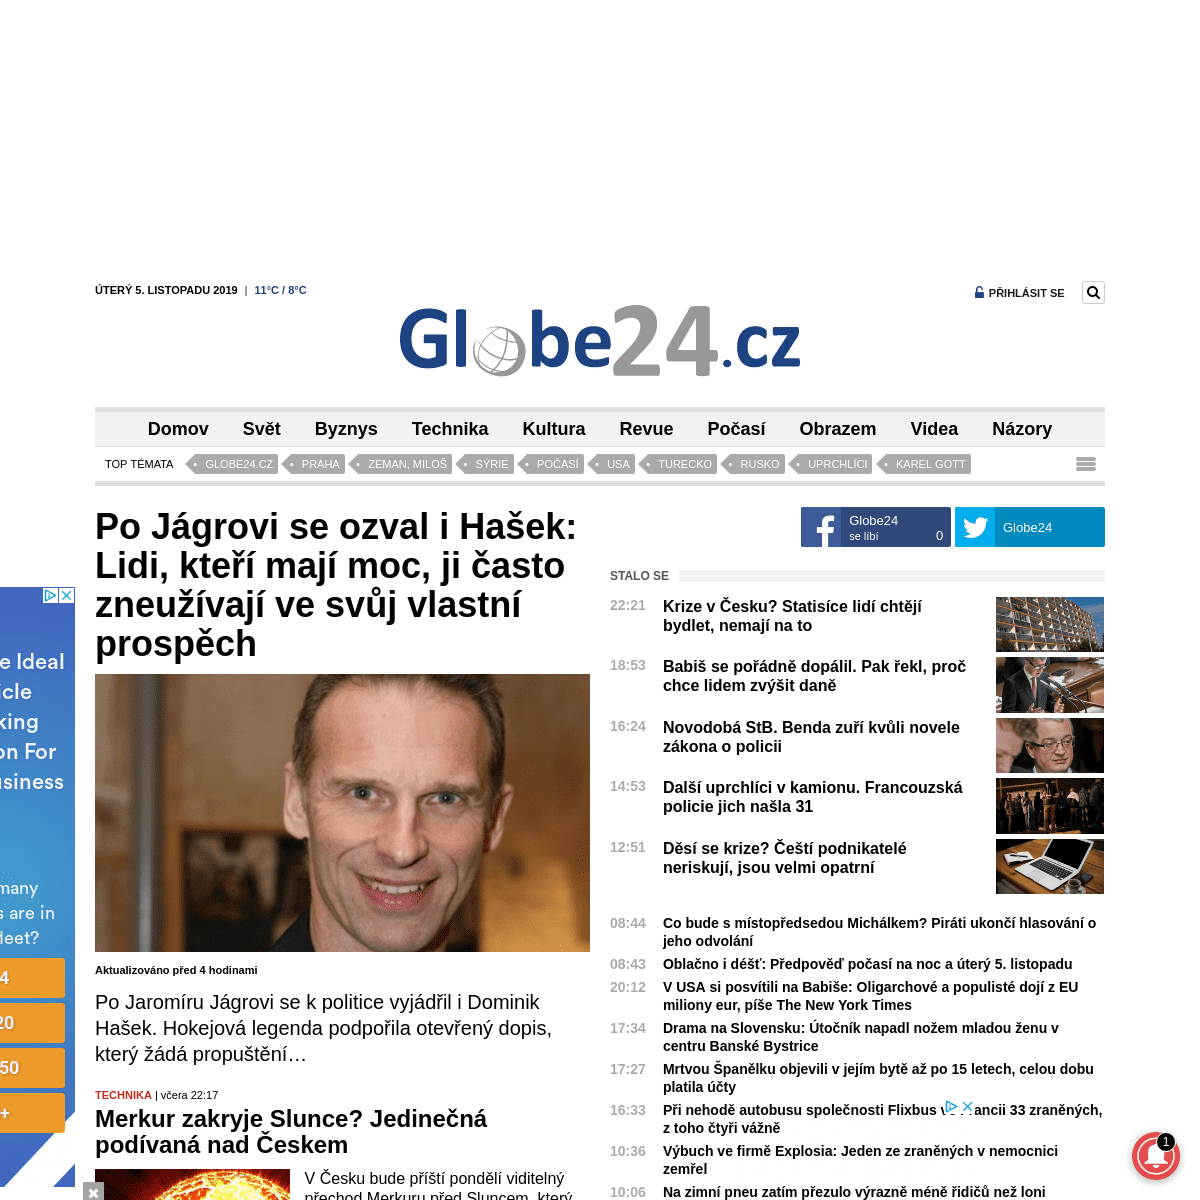 A complete backup of globe24.cz